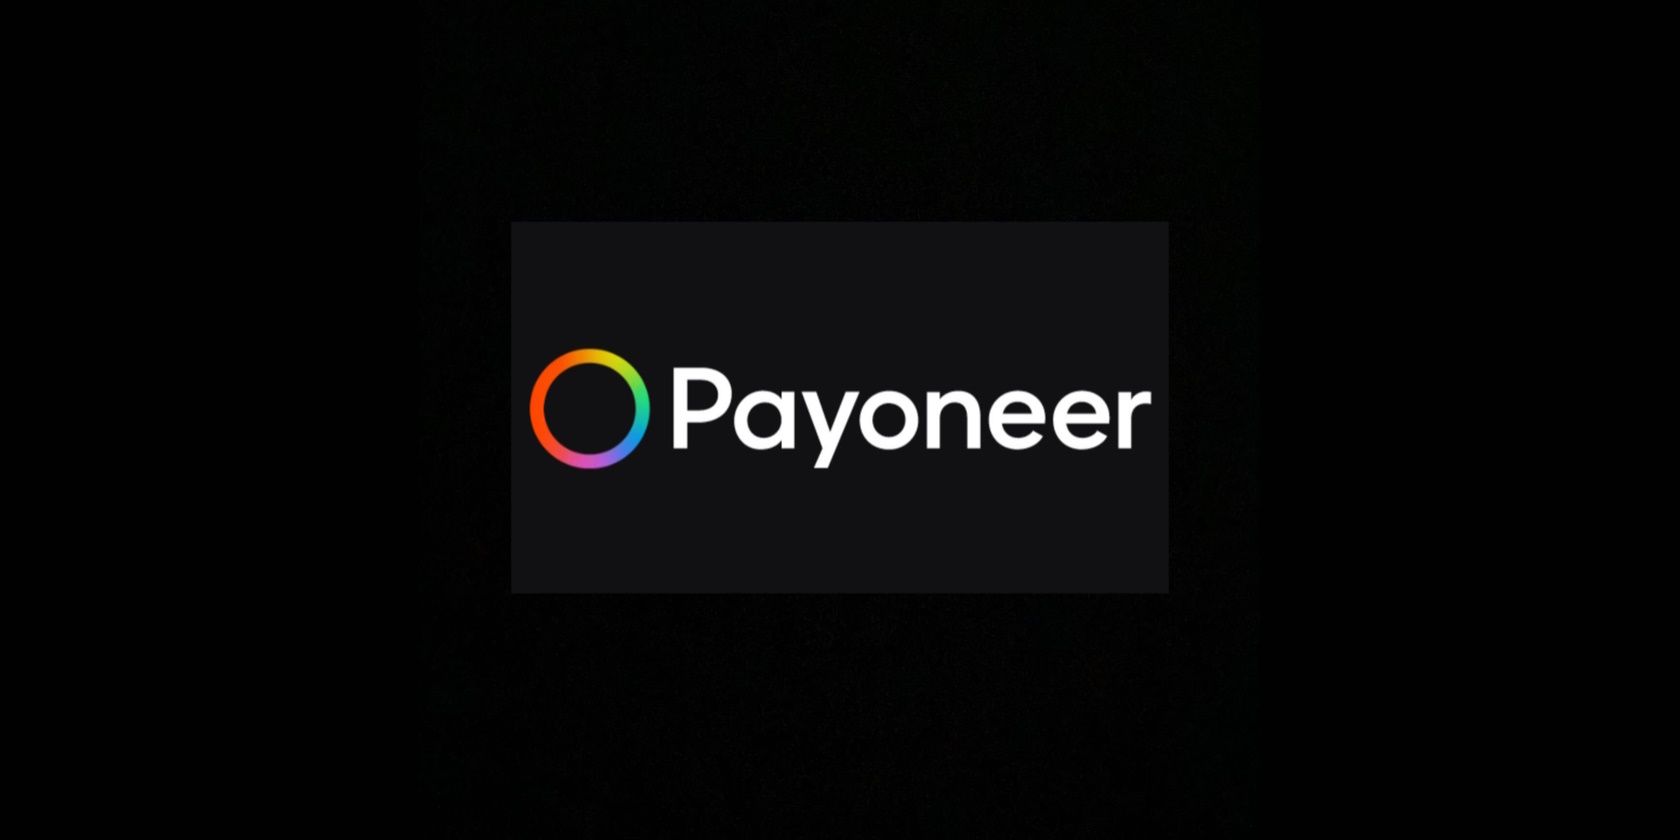 Payoneer logo on black background